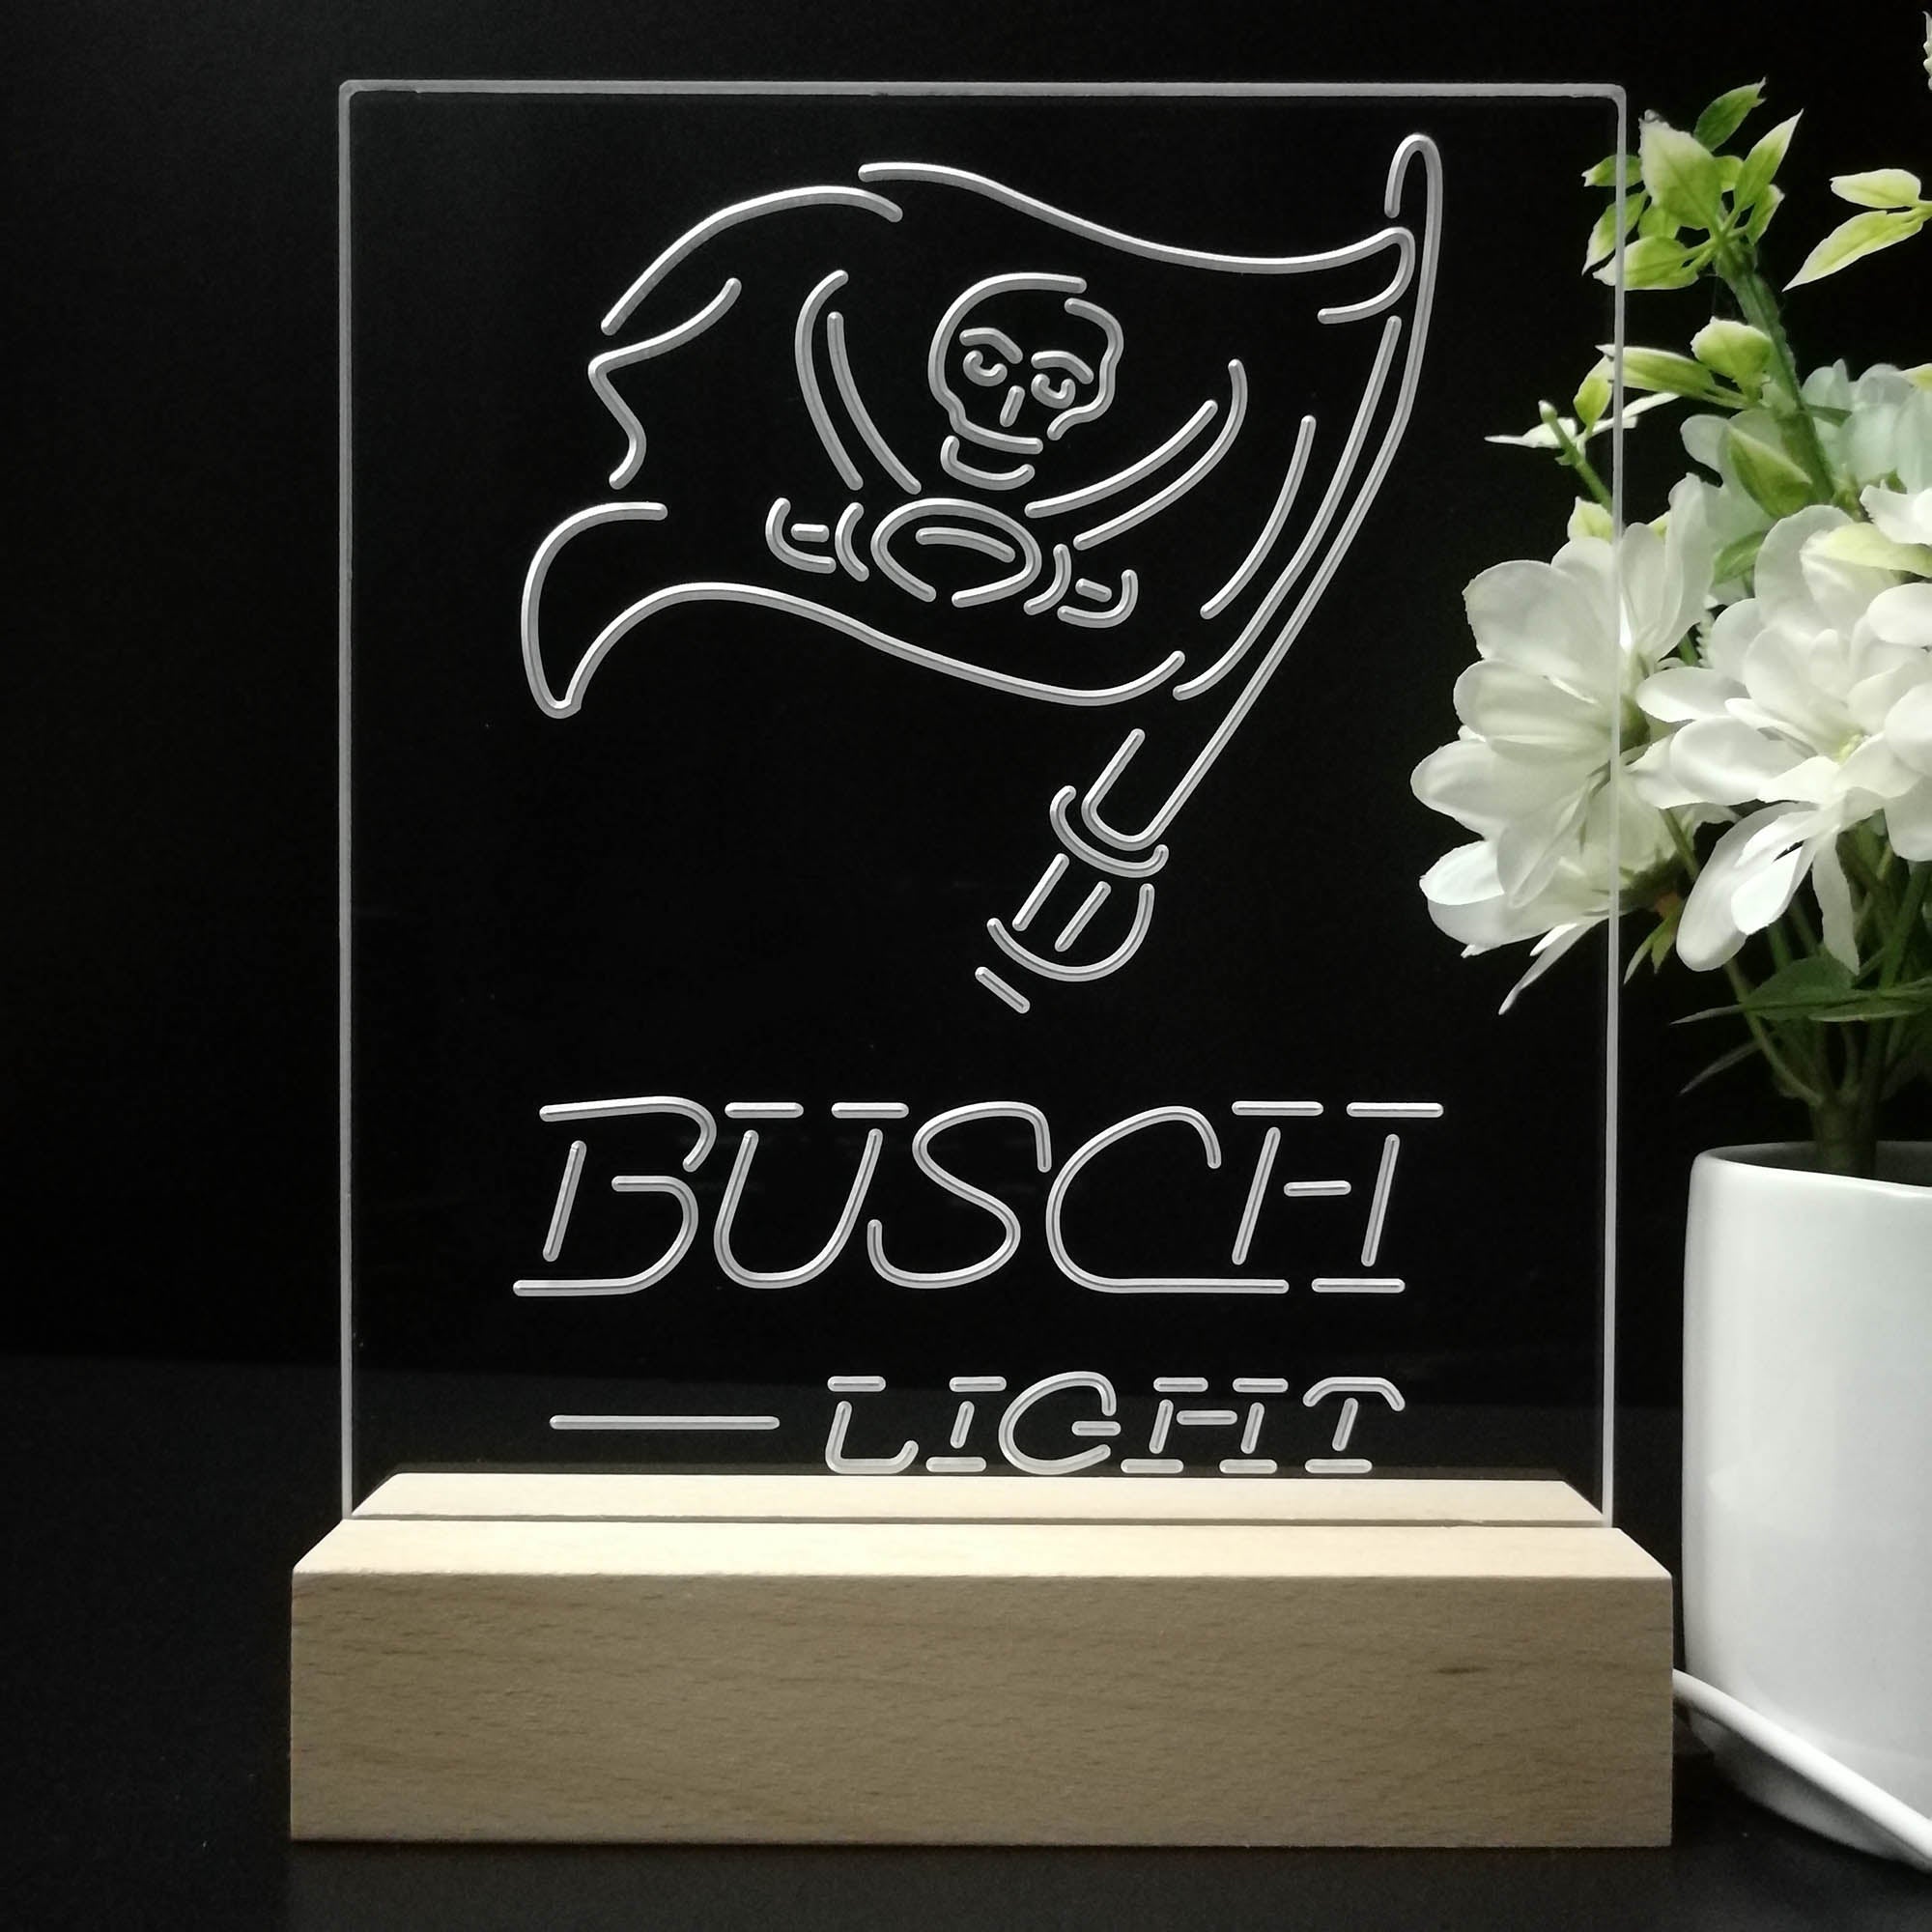 Tampa Bay Buccaneers Busch Light 3D LED Optical Illusion Sport Team Night Light